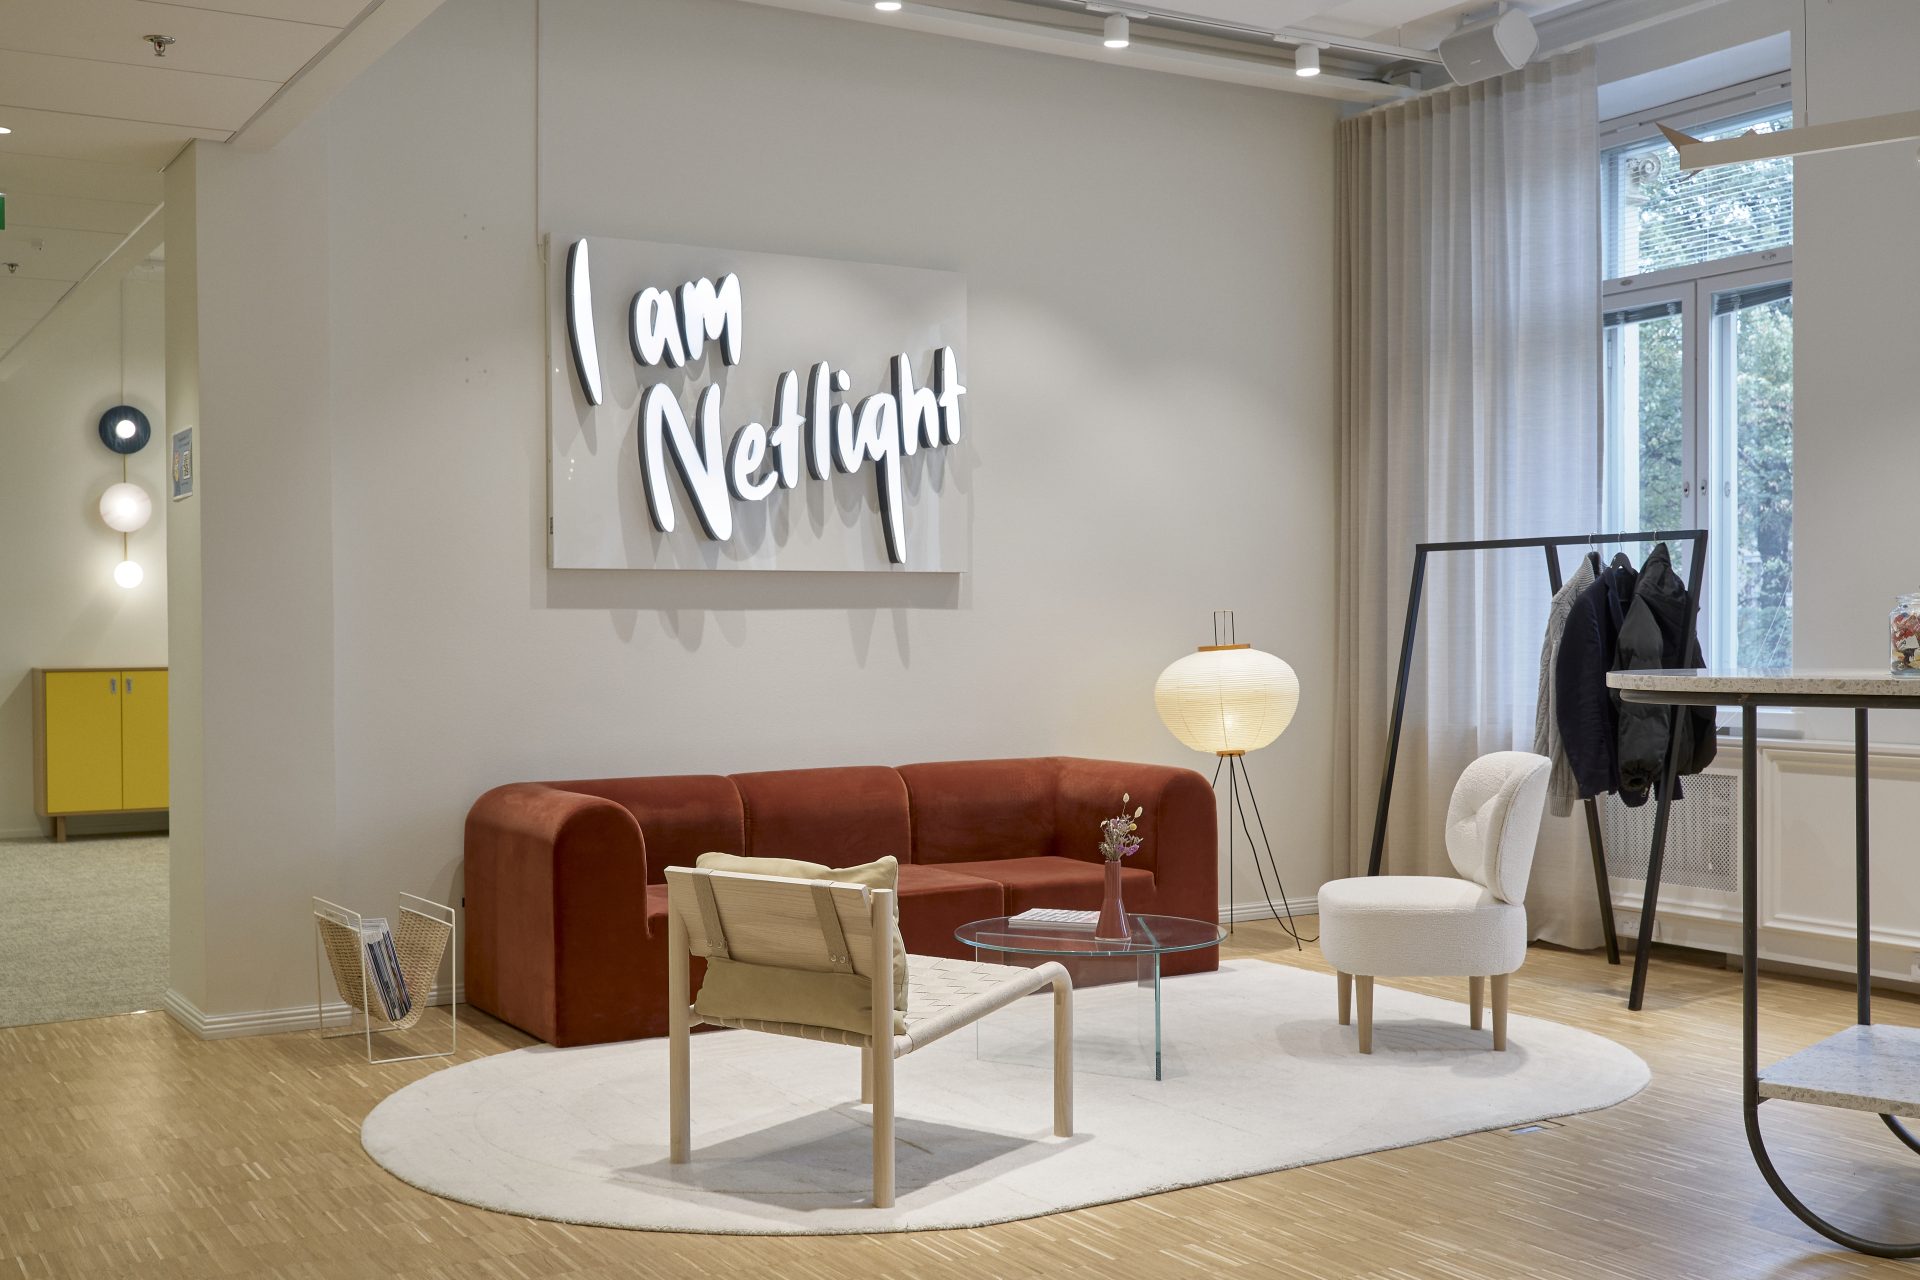 Netlight Helsinki